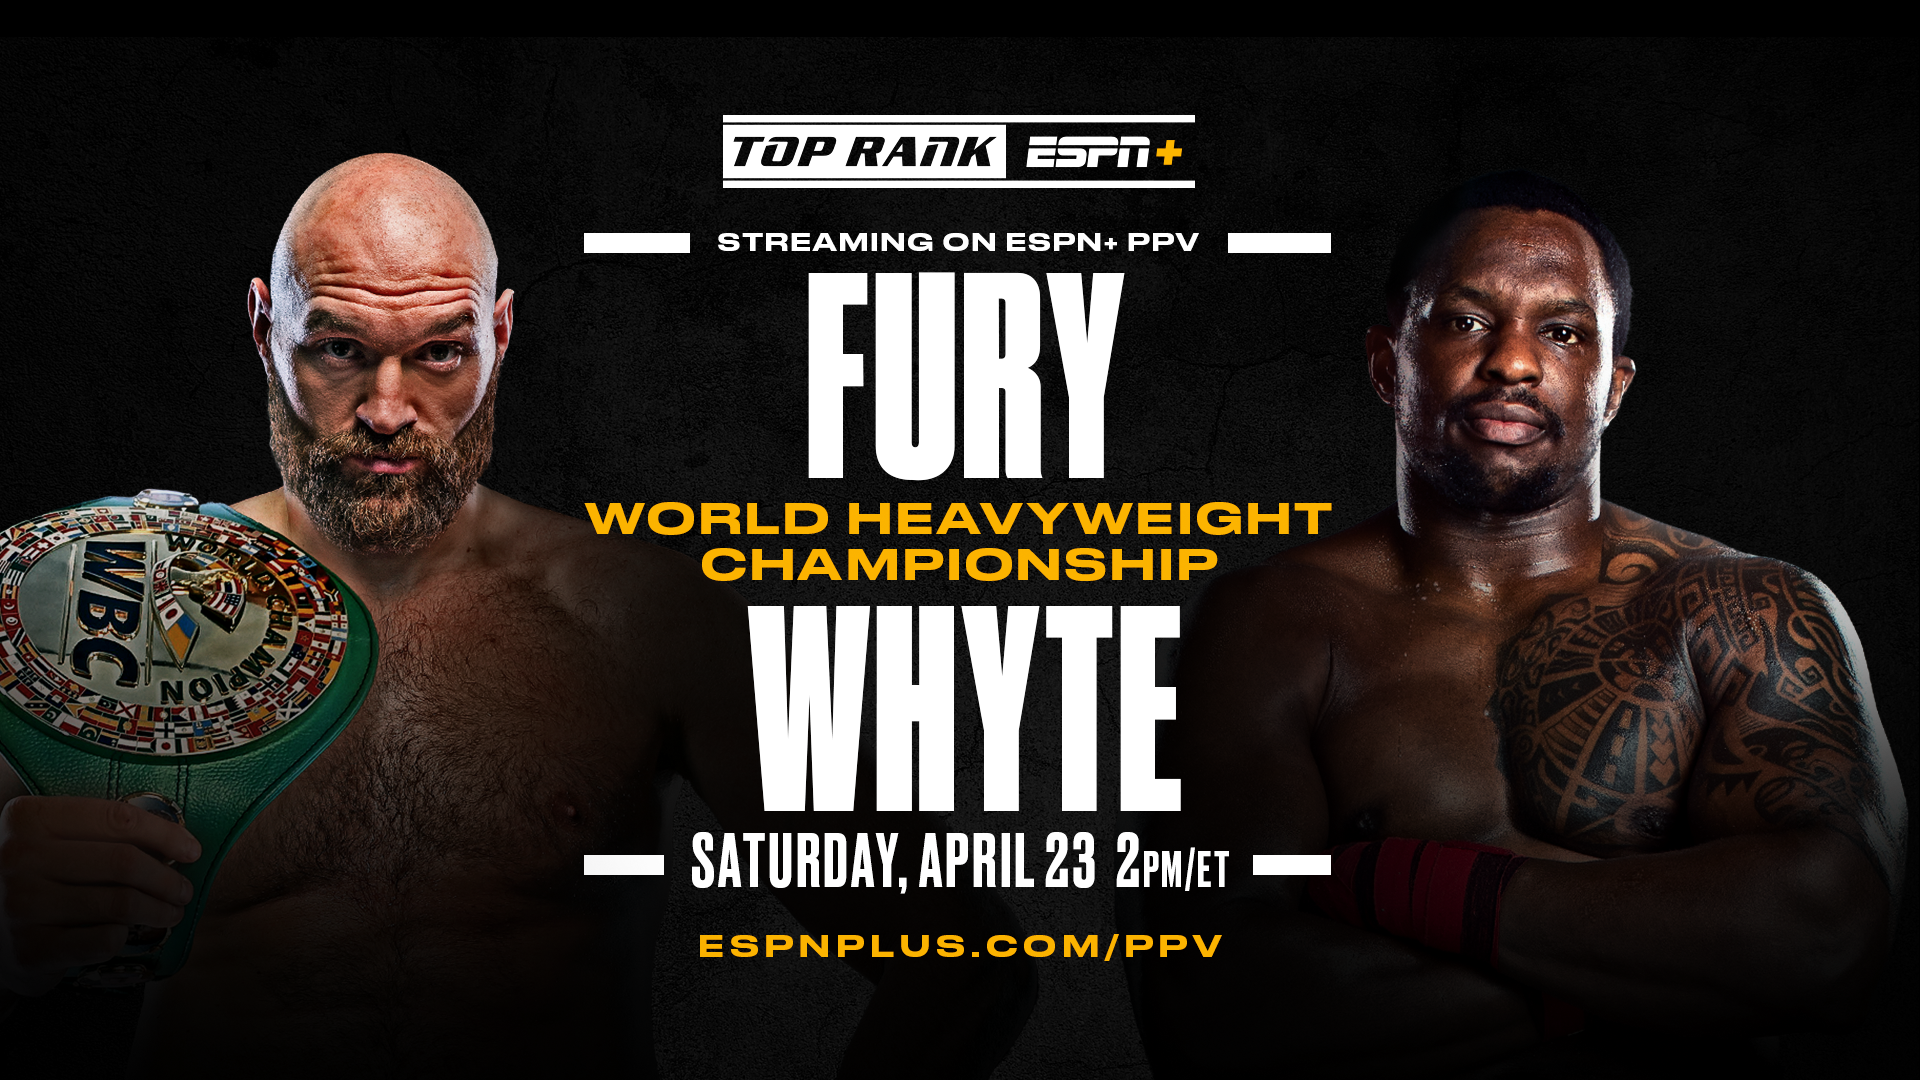 Top Rank on ESPN Presents Clash of Heavyweight Titans Fury vs